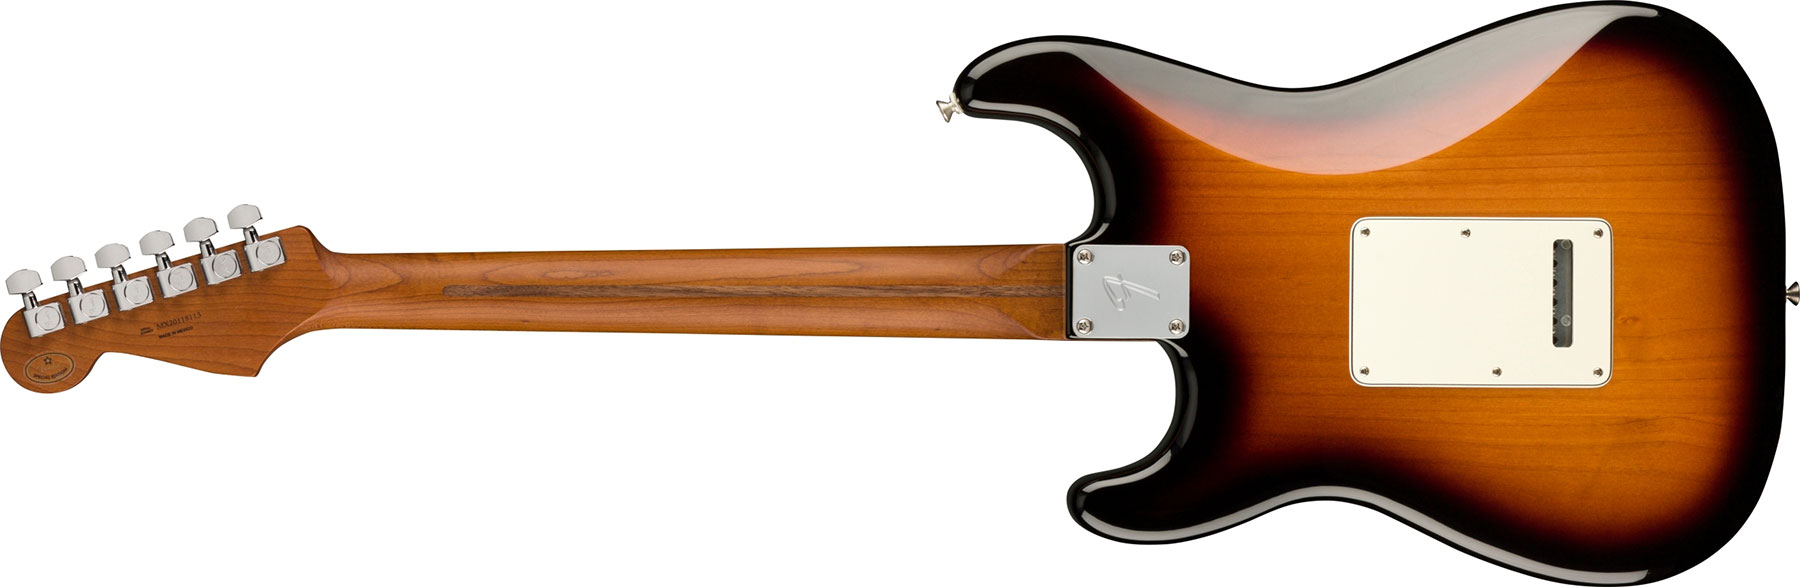 Fender Strat Player 1959 Texas Special Ltd Mex 3s Mn +housse X-tone 2015 Ele-bk - 2-color Sunburst - E-Gitarre Set - Variation 1